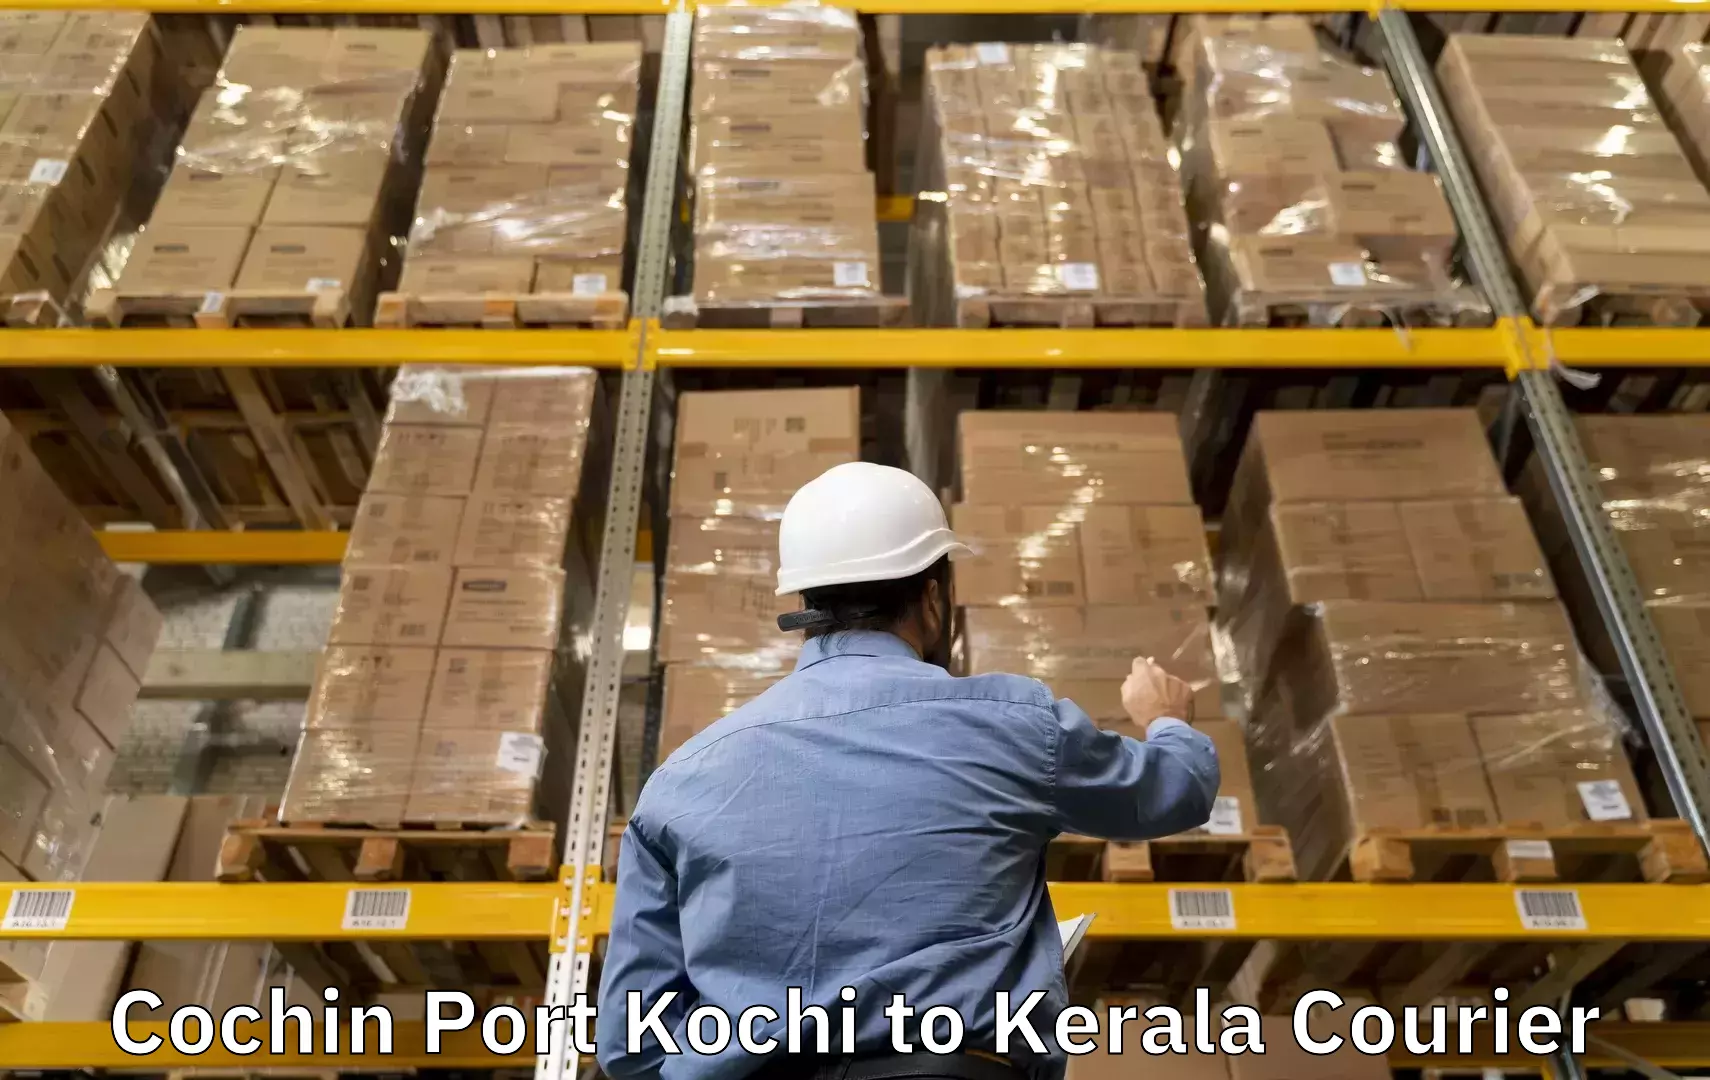 Baggage transport professionals Cochin Port Kochi to Kannur